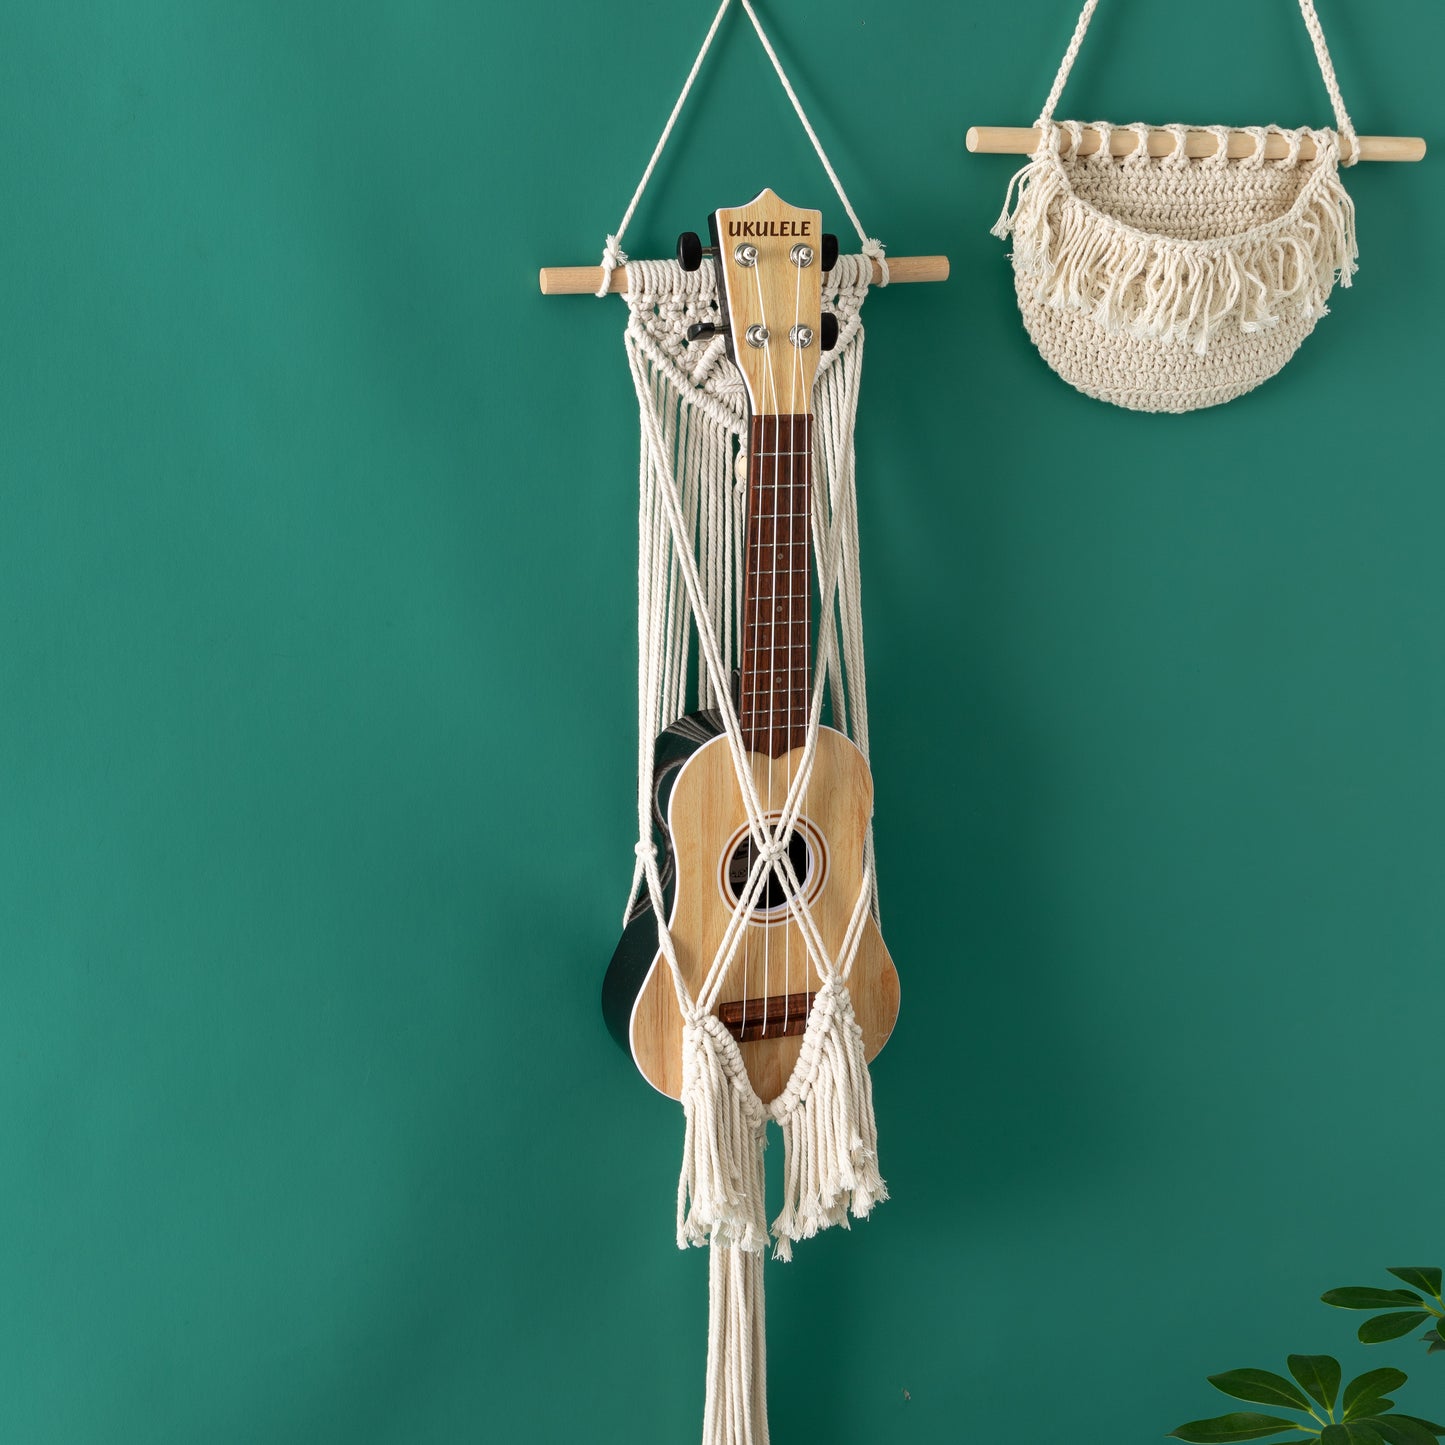 Handcrafted Macrame Ukulele Guitar Display Stand hanger Wall Hanging